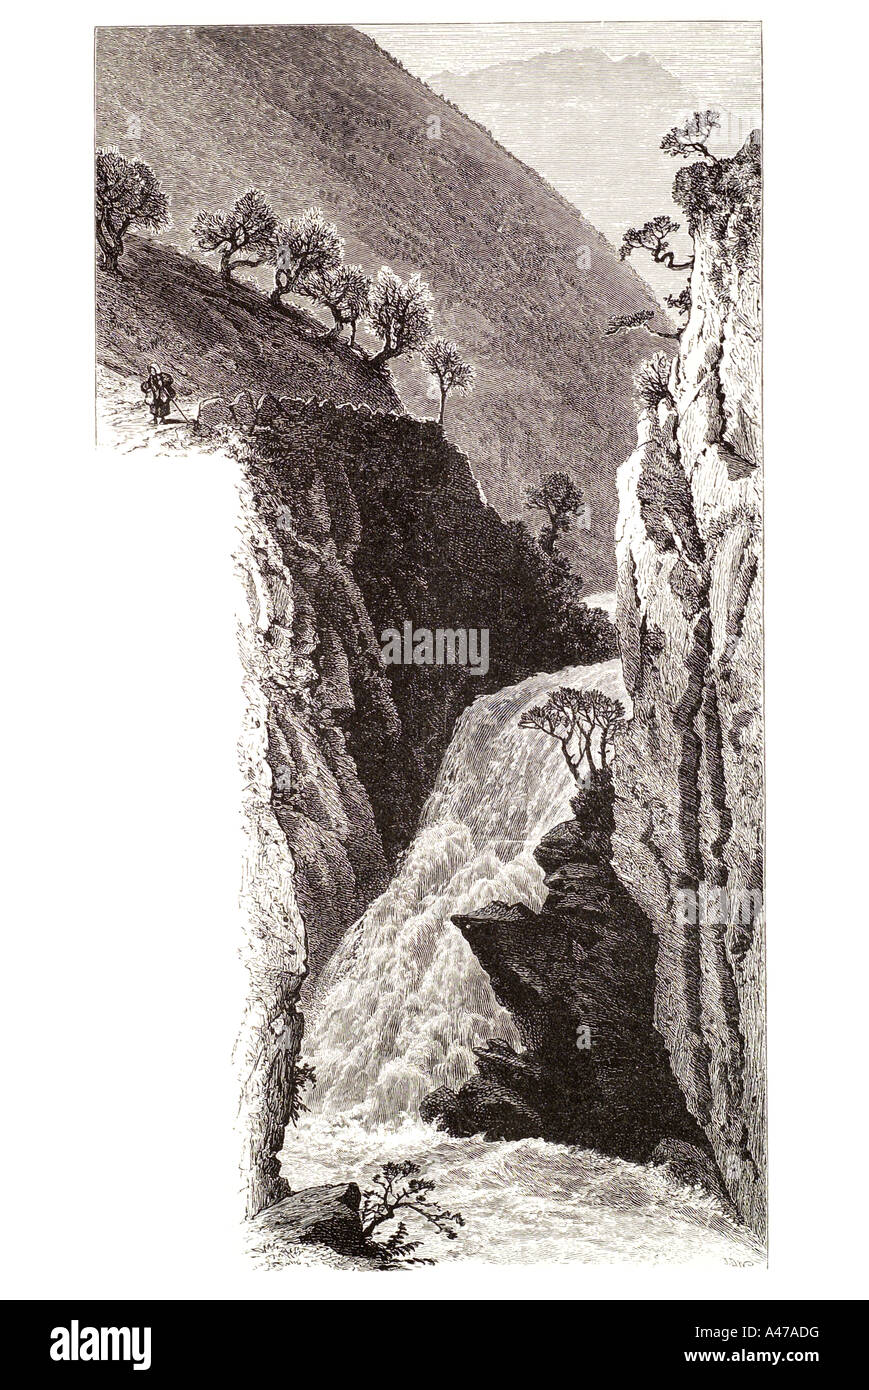 Leirdal sognefjell nordique norvégien Norvège Scandinavie valley mountain waterfall cascade torrent river gorge voie chemin bois Banque D'Images